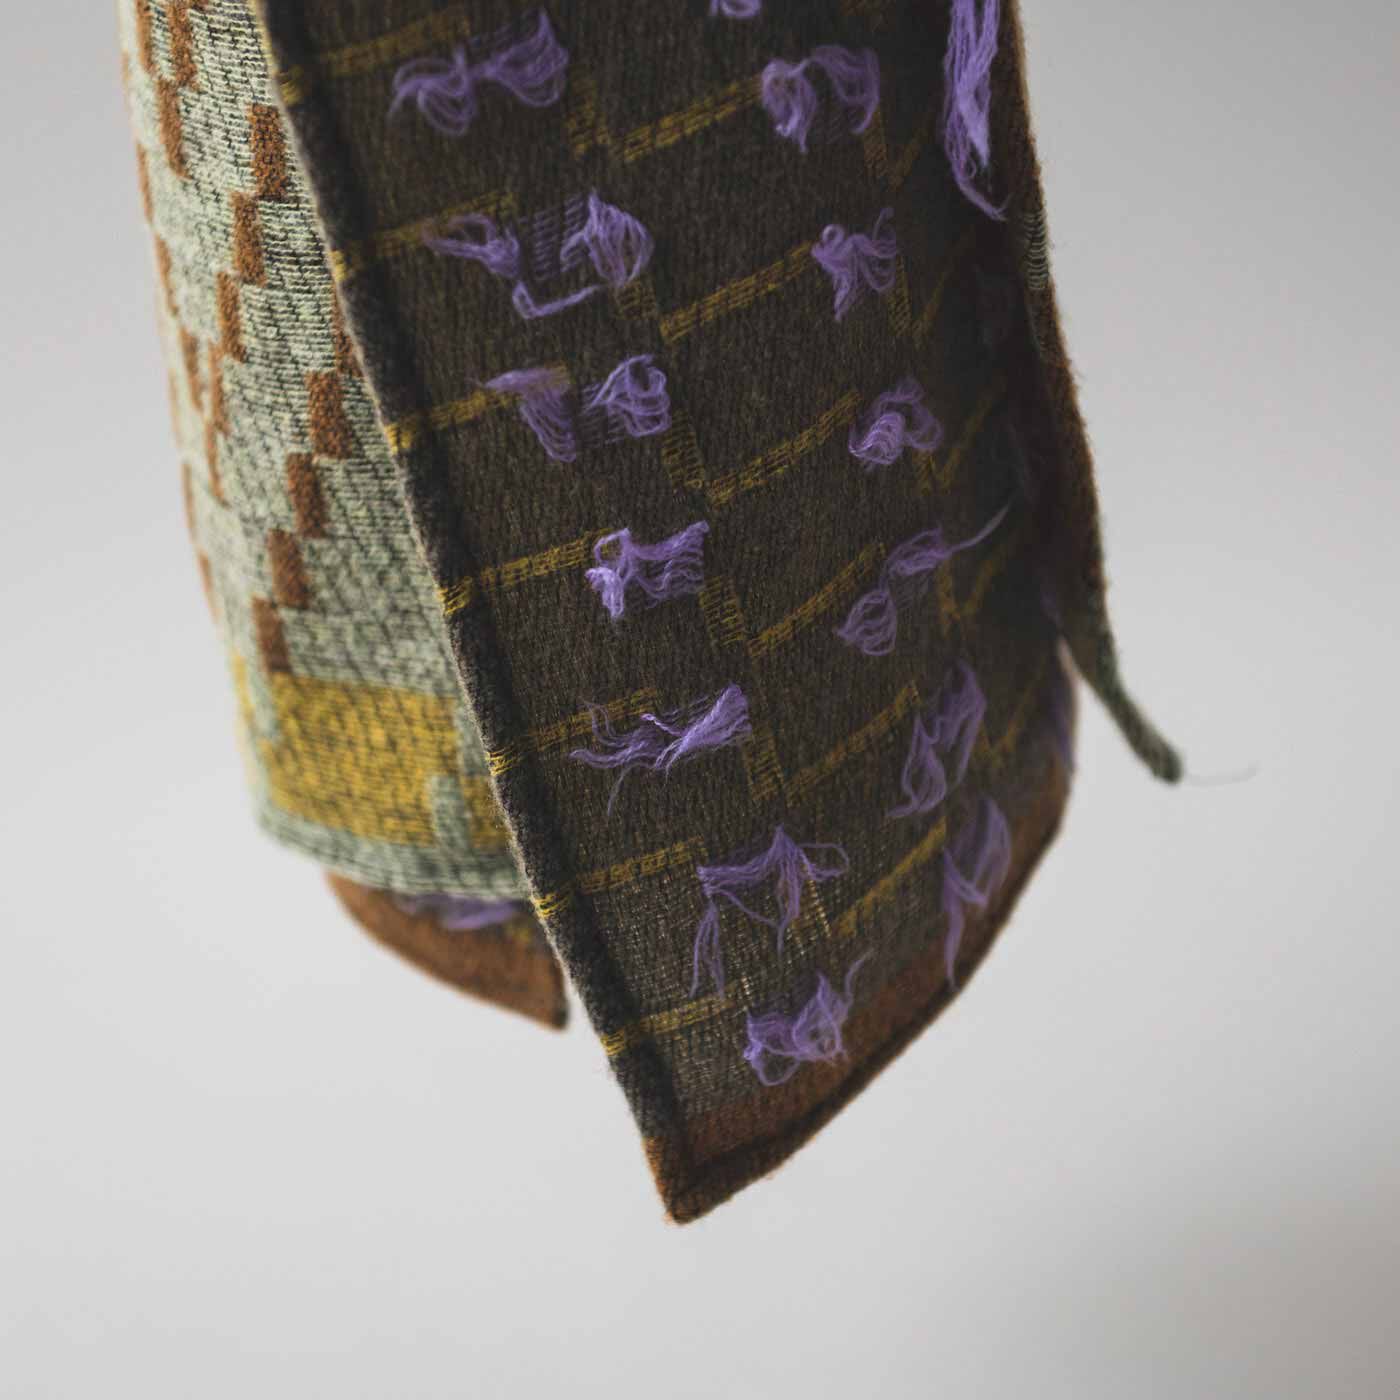 ＆Stories|テキスタイルデザイナーと作った 播州ジャカード織のブークレストール〈ライラック色〉|綿とウール素材による軽さも魅力です。